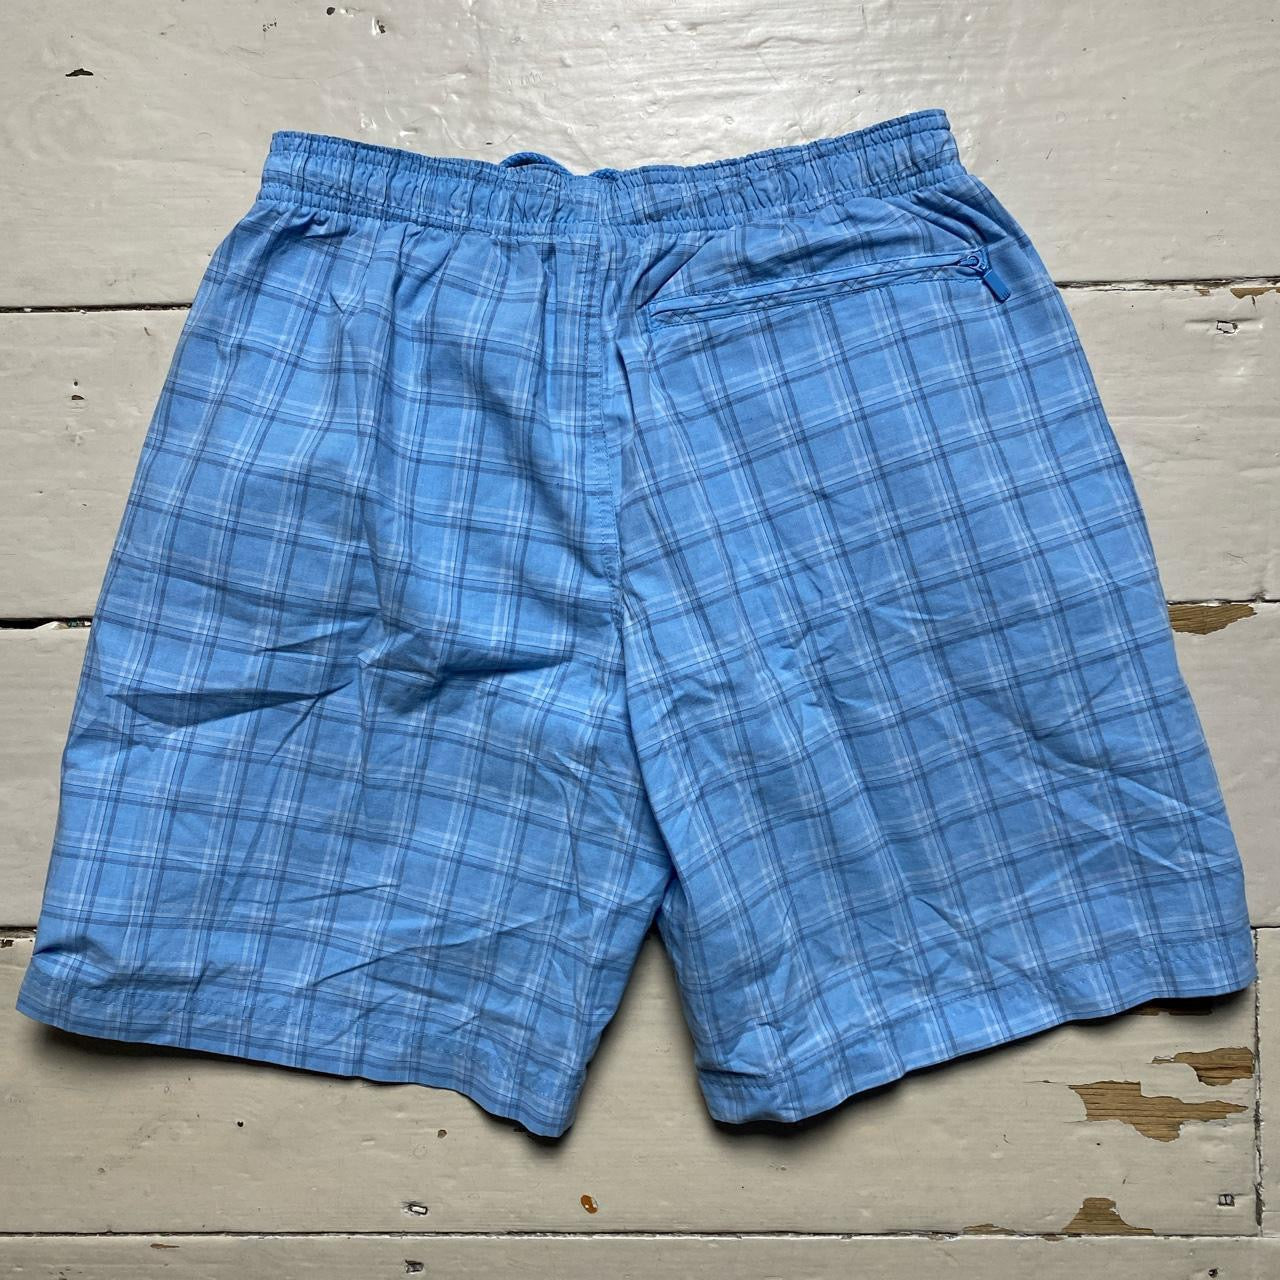 Adidas Vintage Light Blue Shorts (Small)